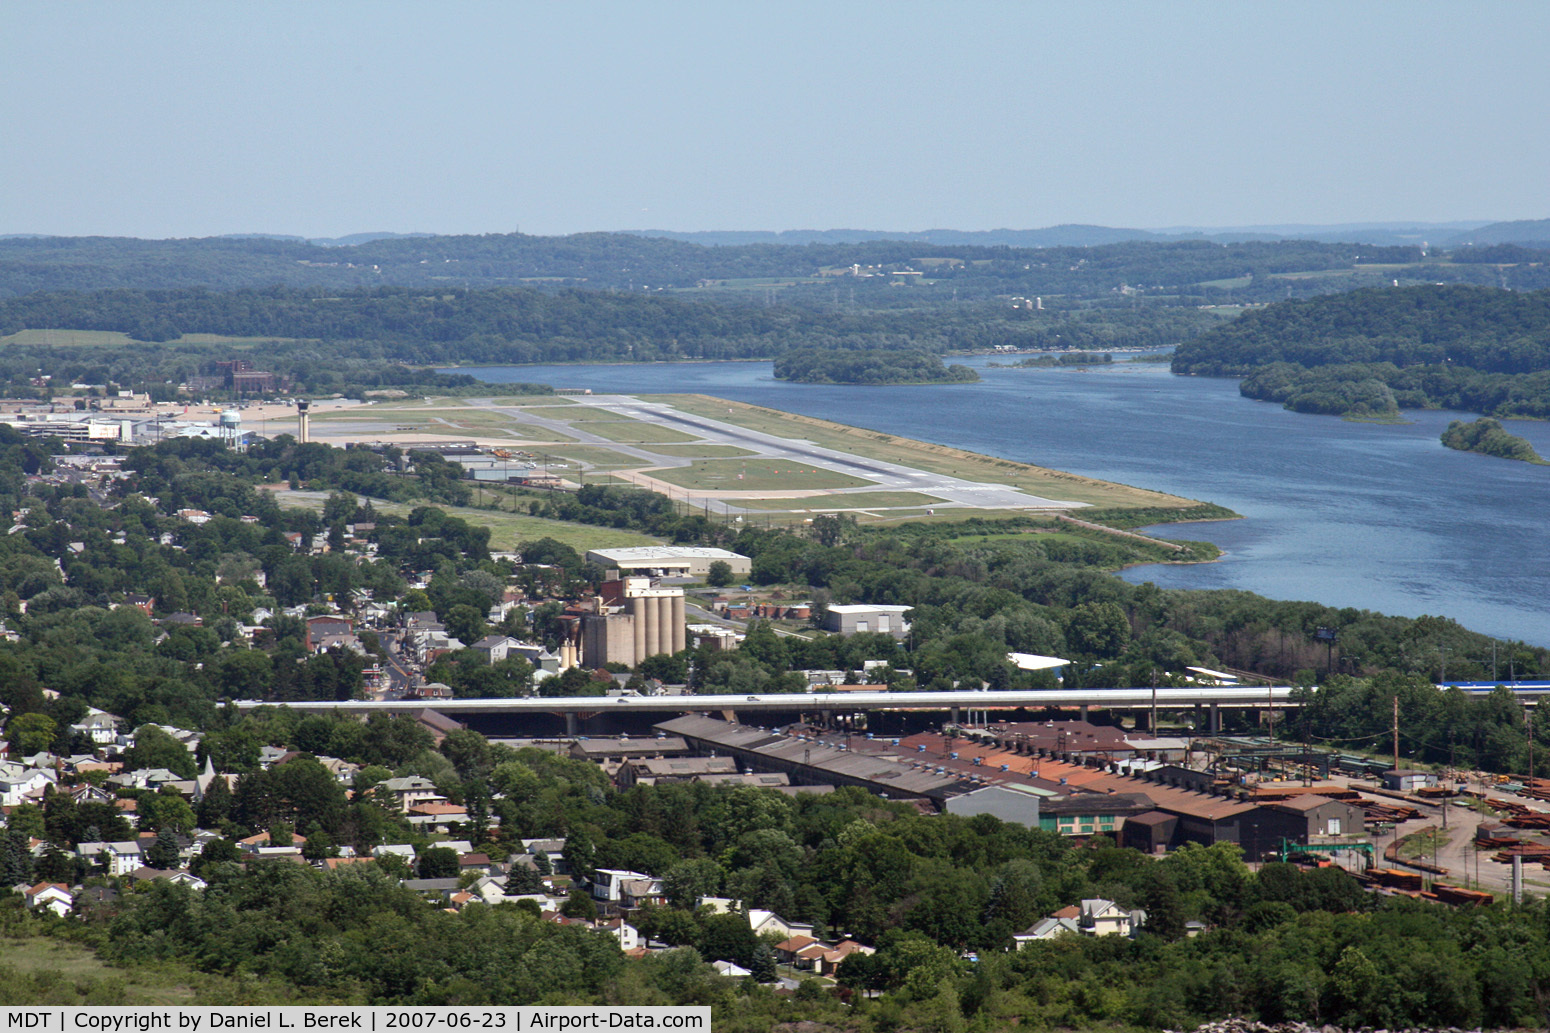 Harrisburg International Airport (MDT) - Harrisburg International Airport, as seen from a low-flying Ford Tri-Motor.